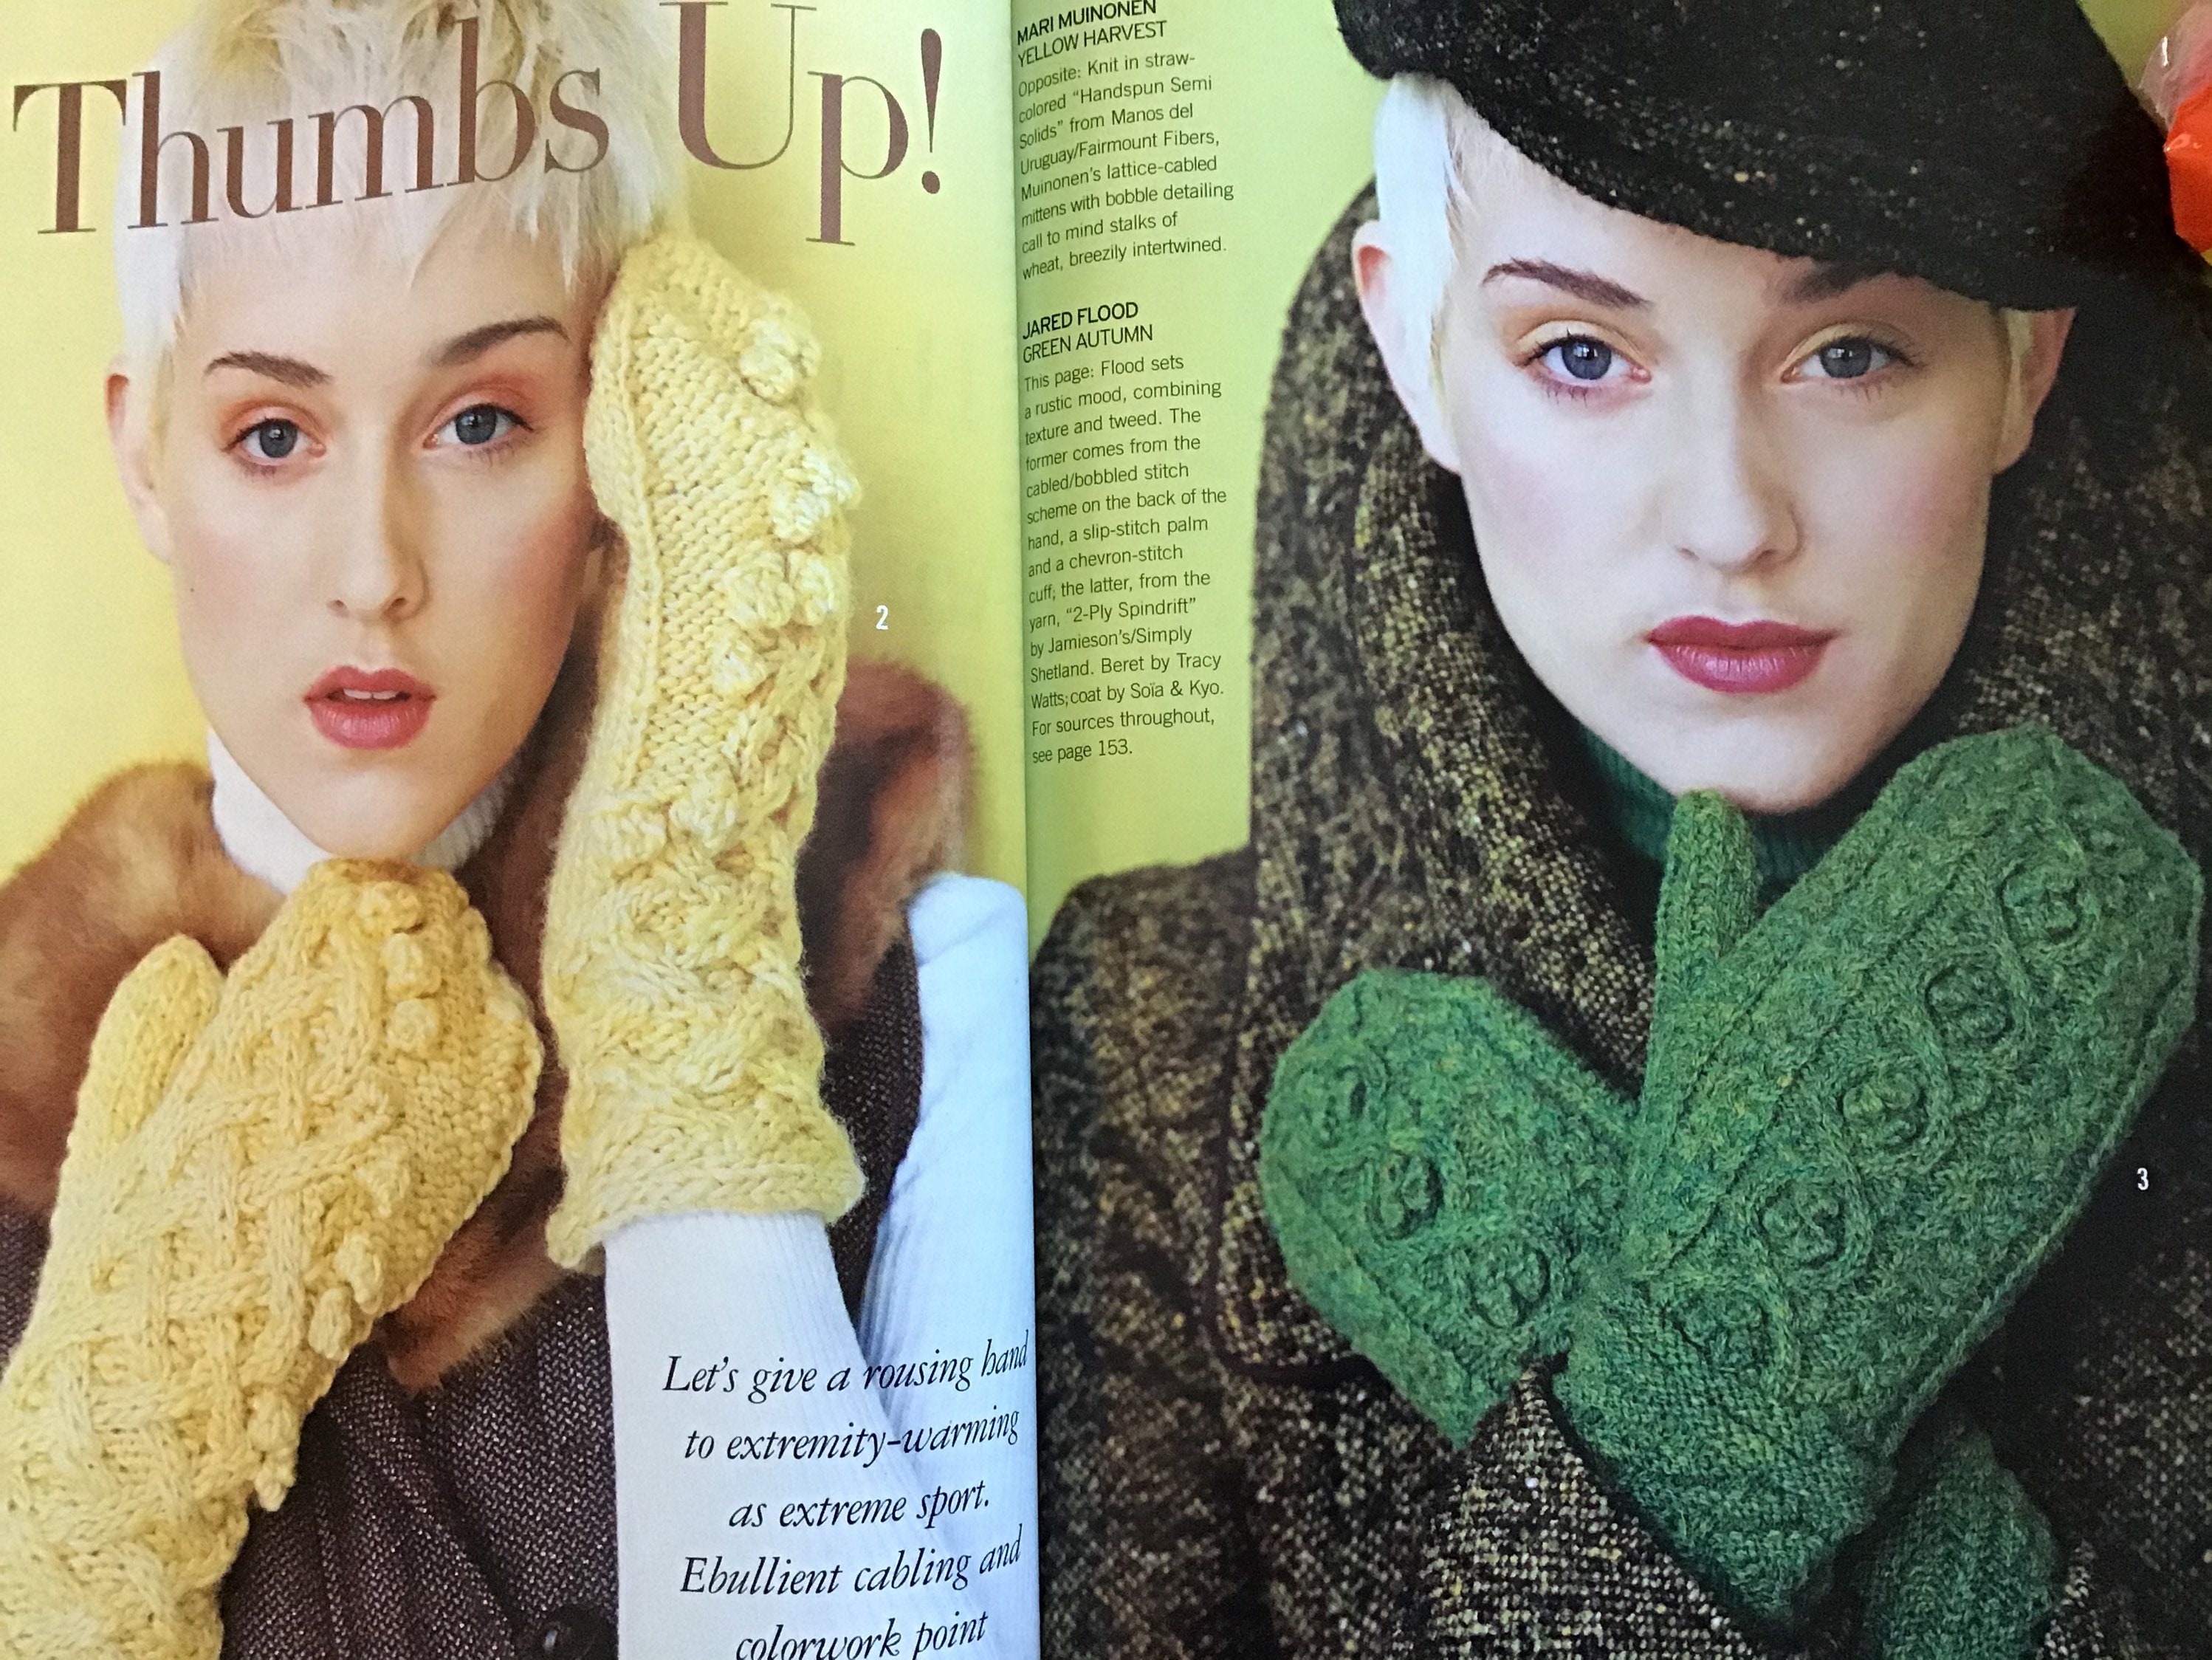 VOGUE Knitting International Magazine Fall 2008 Smitten with Mittens